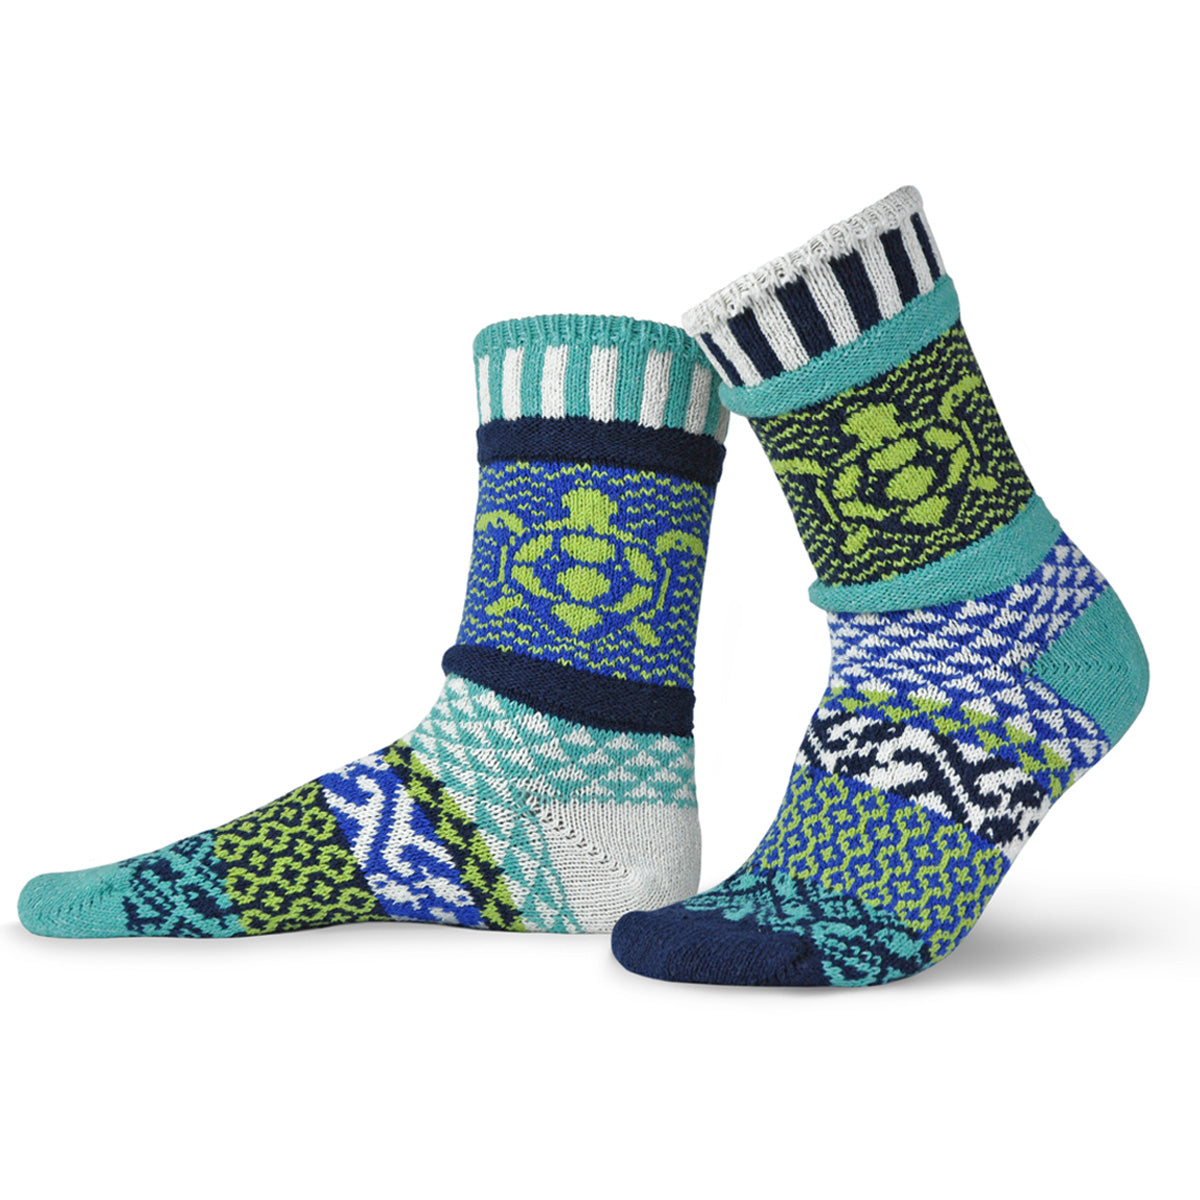 Funky pattern socks feature green sea turtles among Oceanic hues.